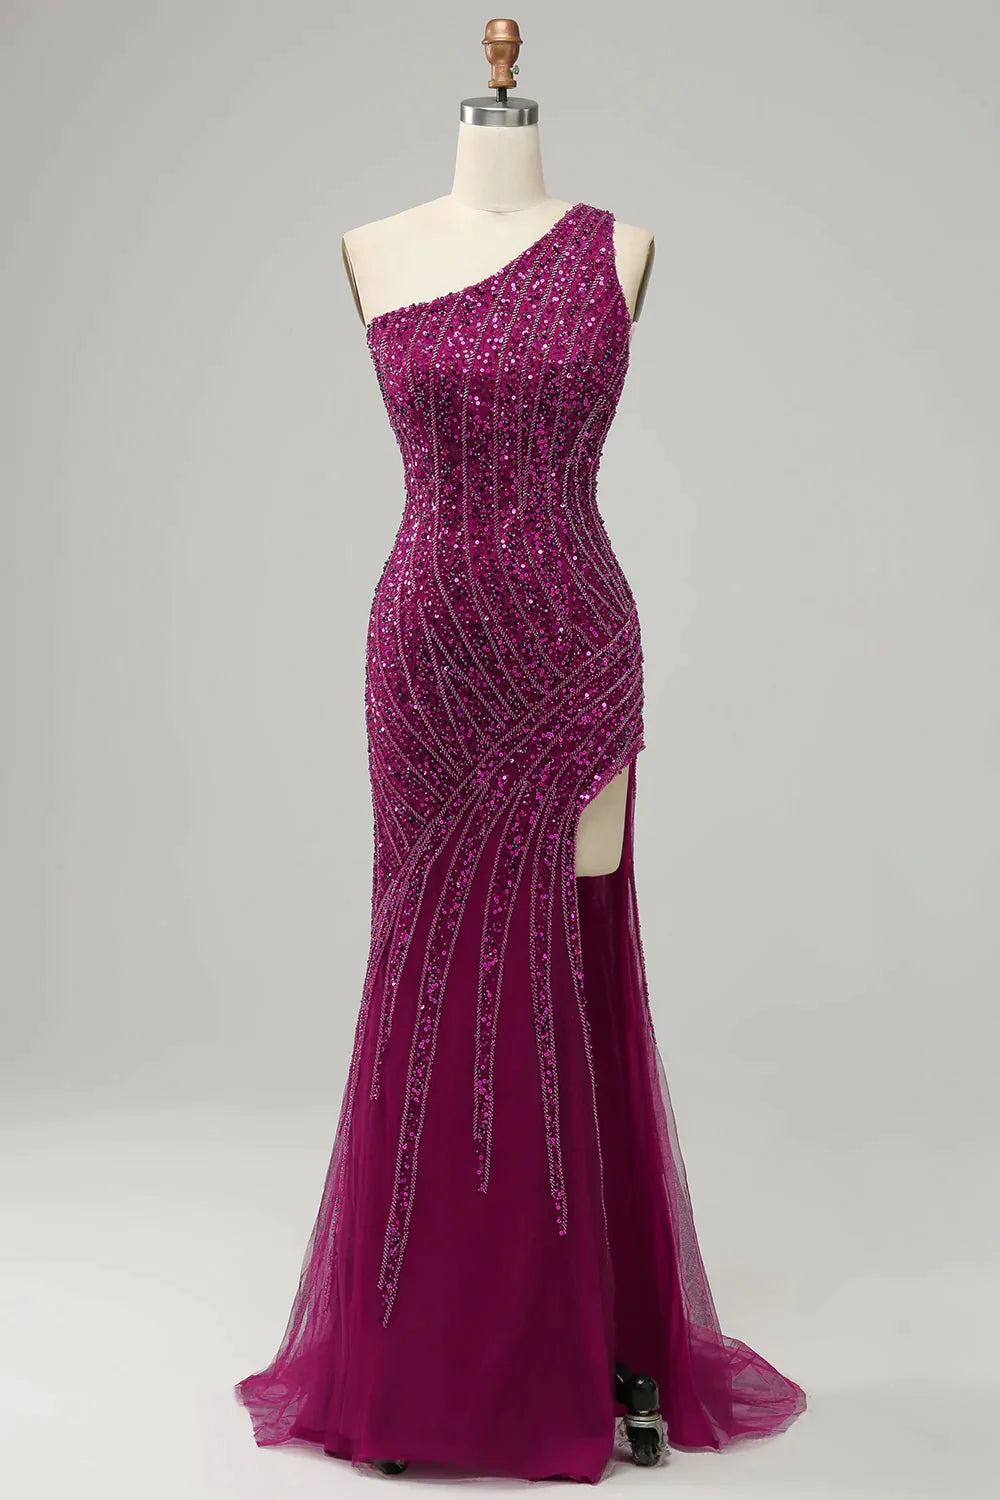 Sparkly One Shoulder Sequin Prom Dress with Slit